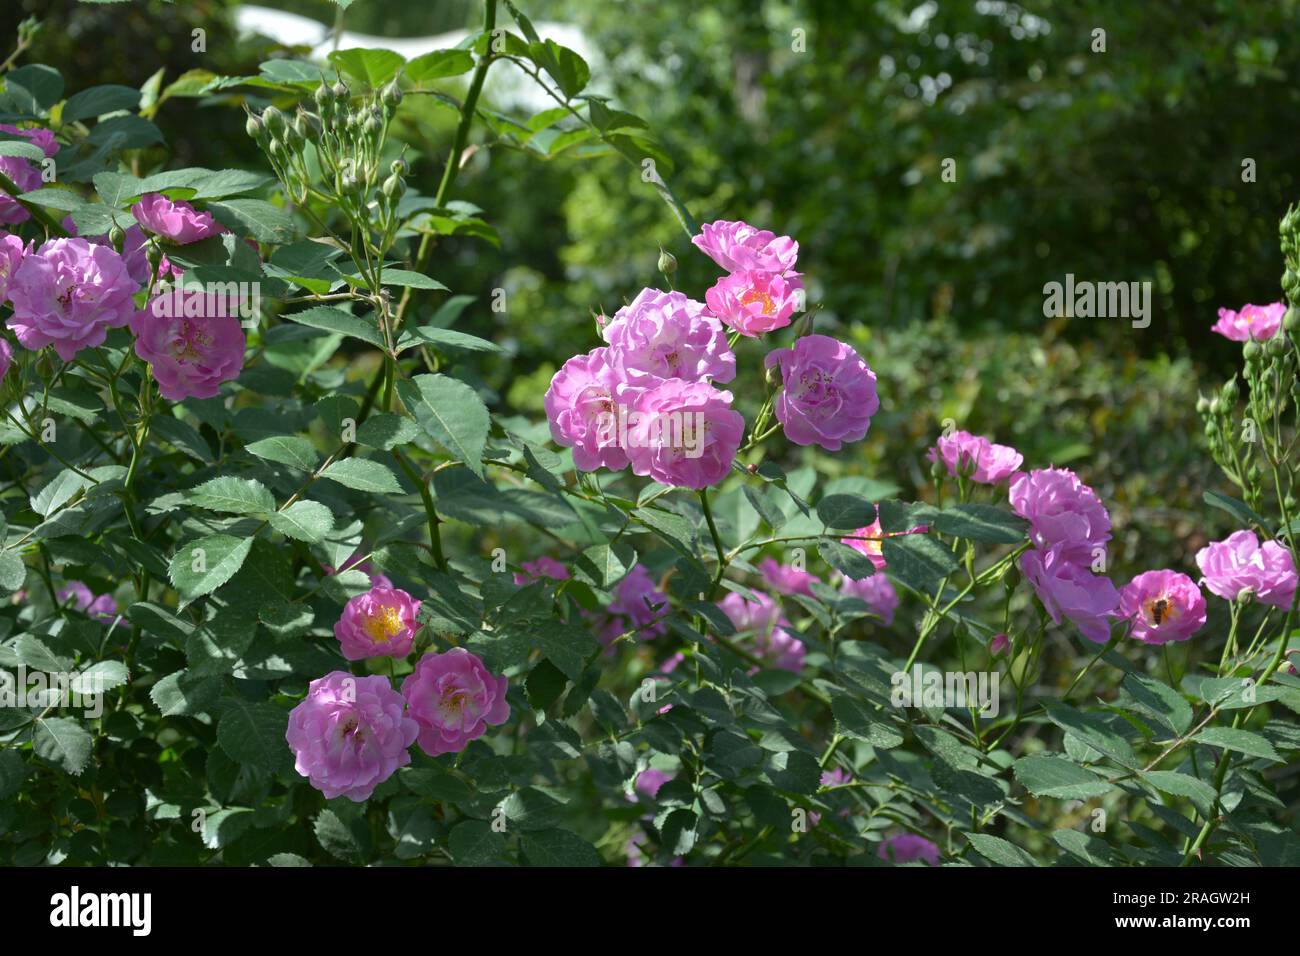 Rosa Rosen blühen im Garten an sonnigen Tagen Stockfoto